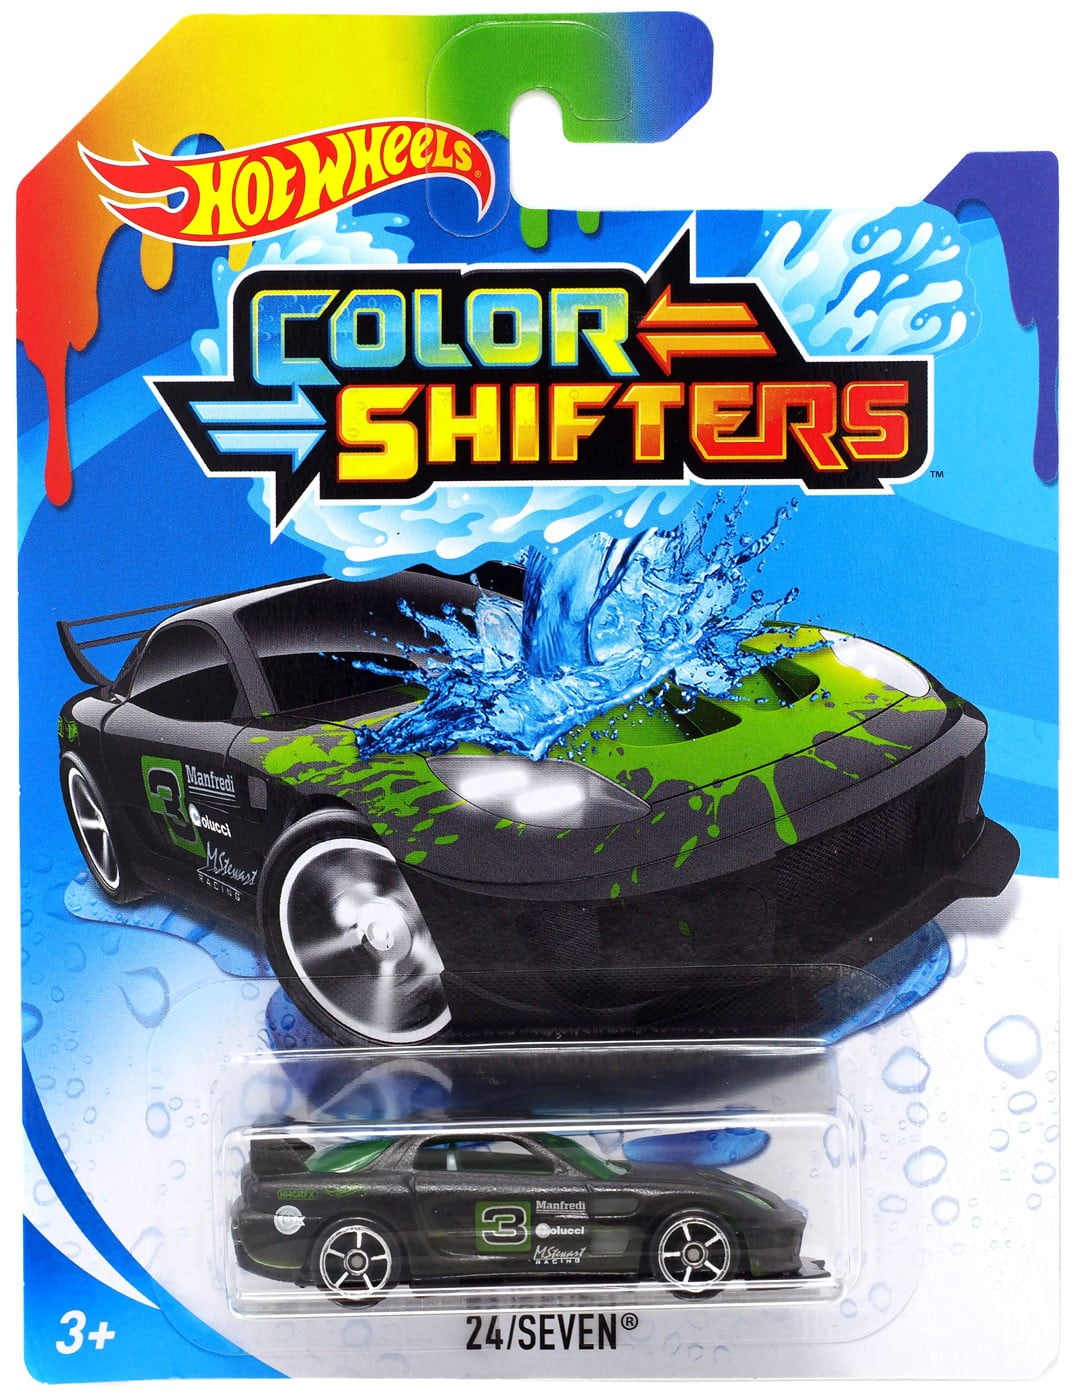 Hot Wheels Color Shifter Labor Spielset Hot Wheels Bahn Hot Wheels Auto 